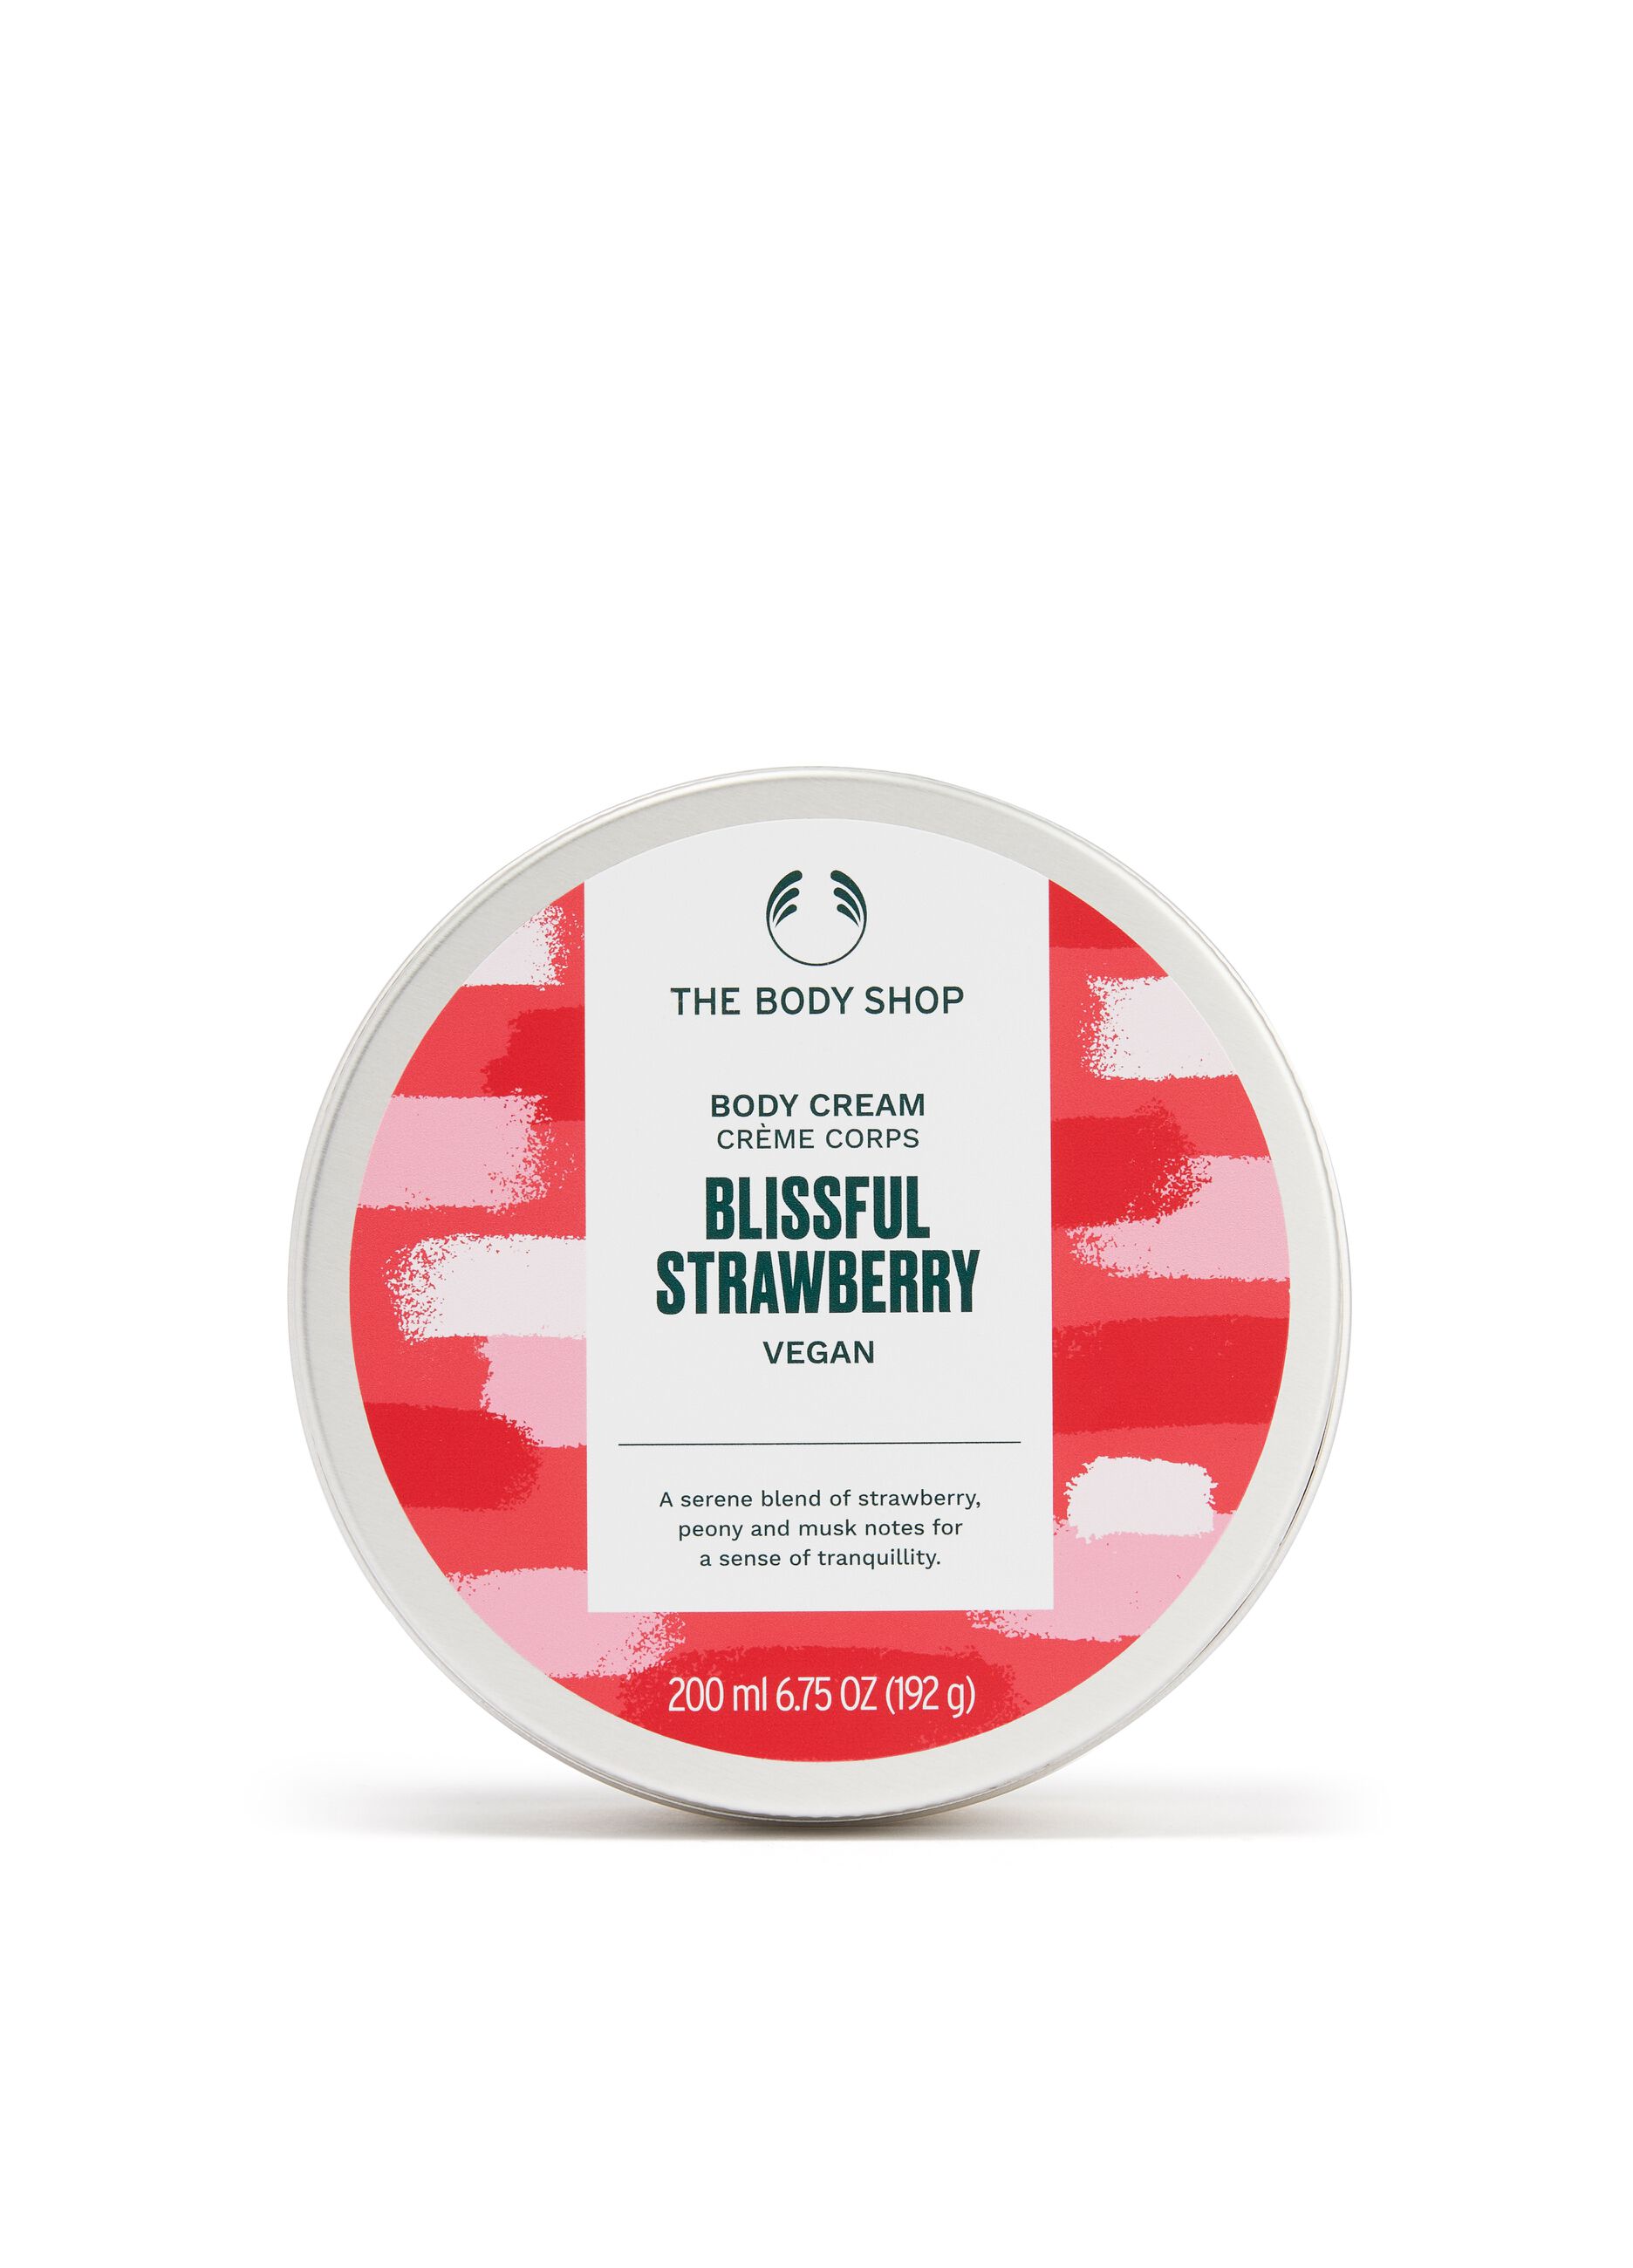 Crema corporal Blissful Strawberry 200ml The Body Shop